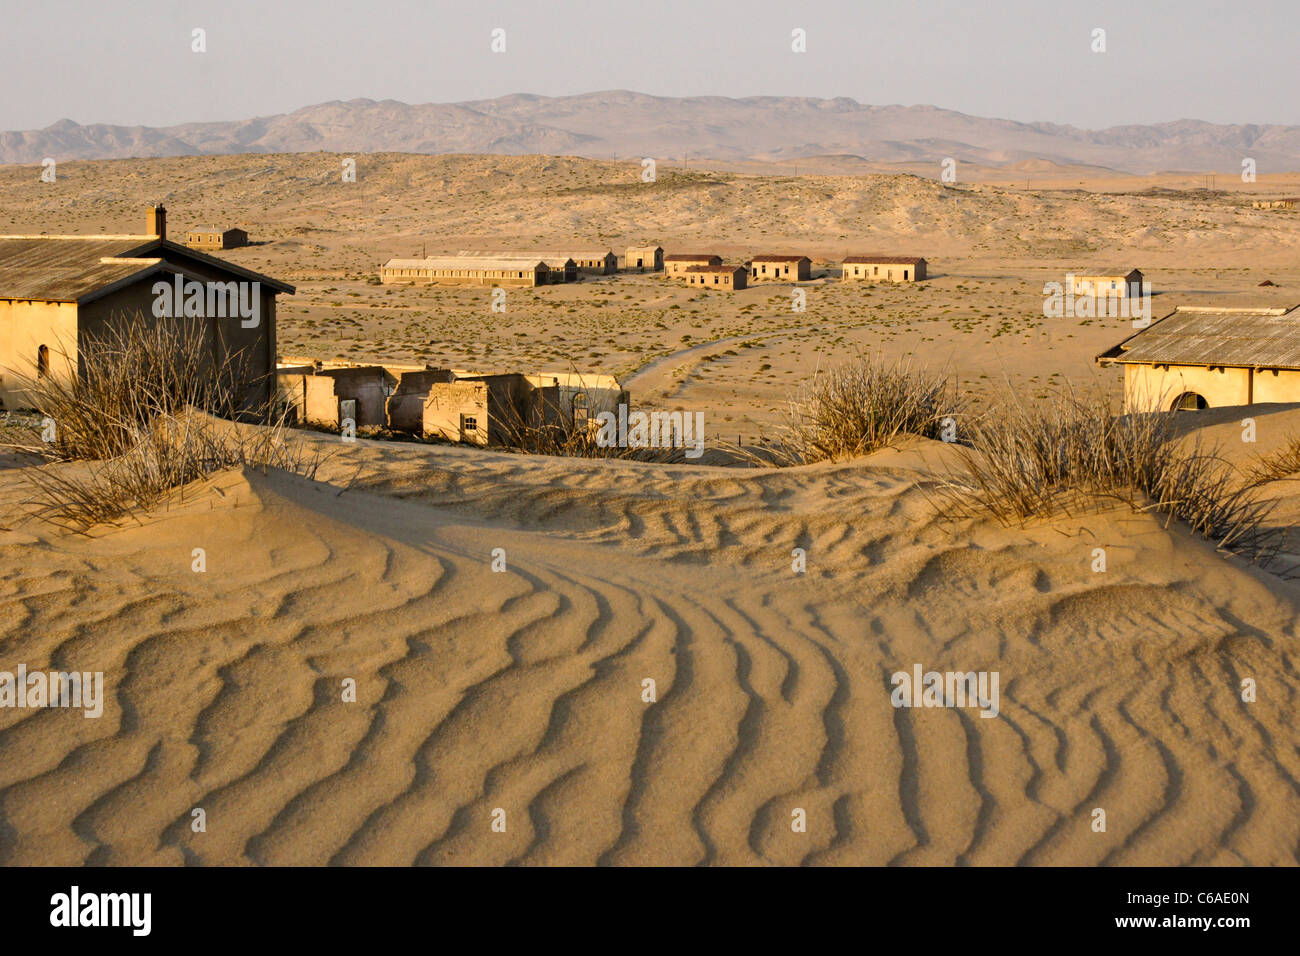 Abandoned diamond mining town of Kolmanskop, Namibia Stock Photo